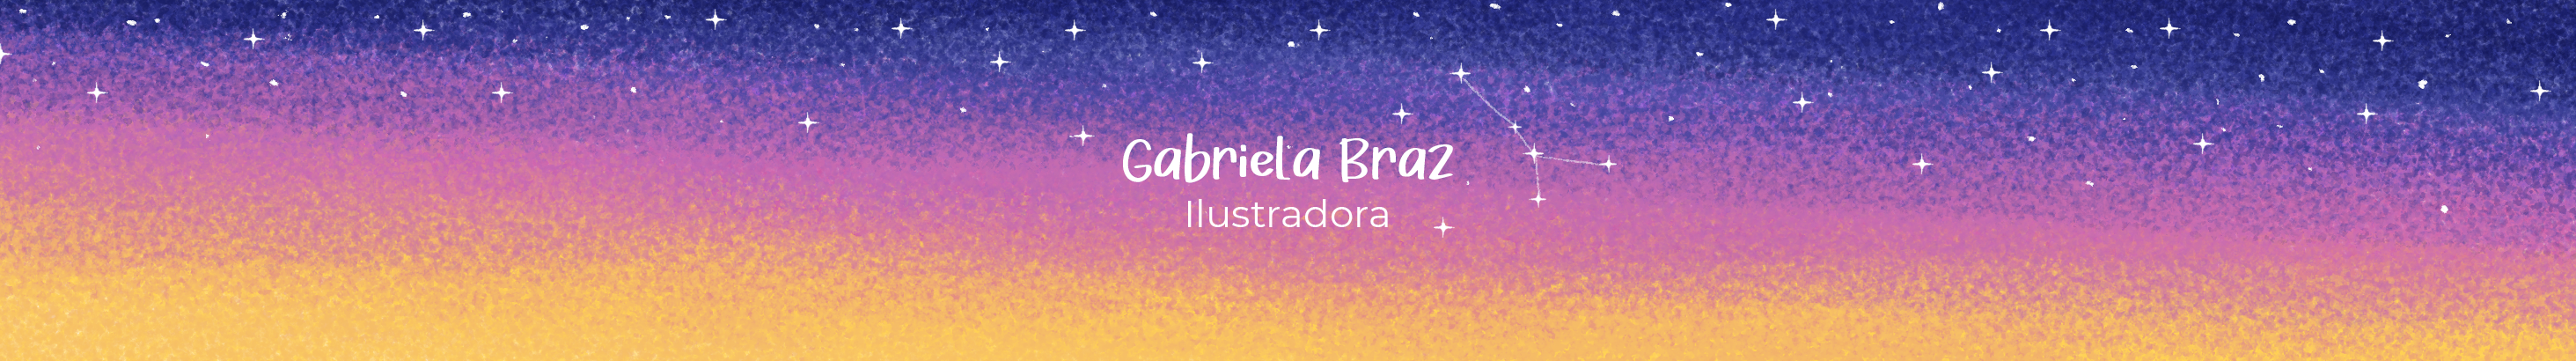 Gabriela Braz's profile banner